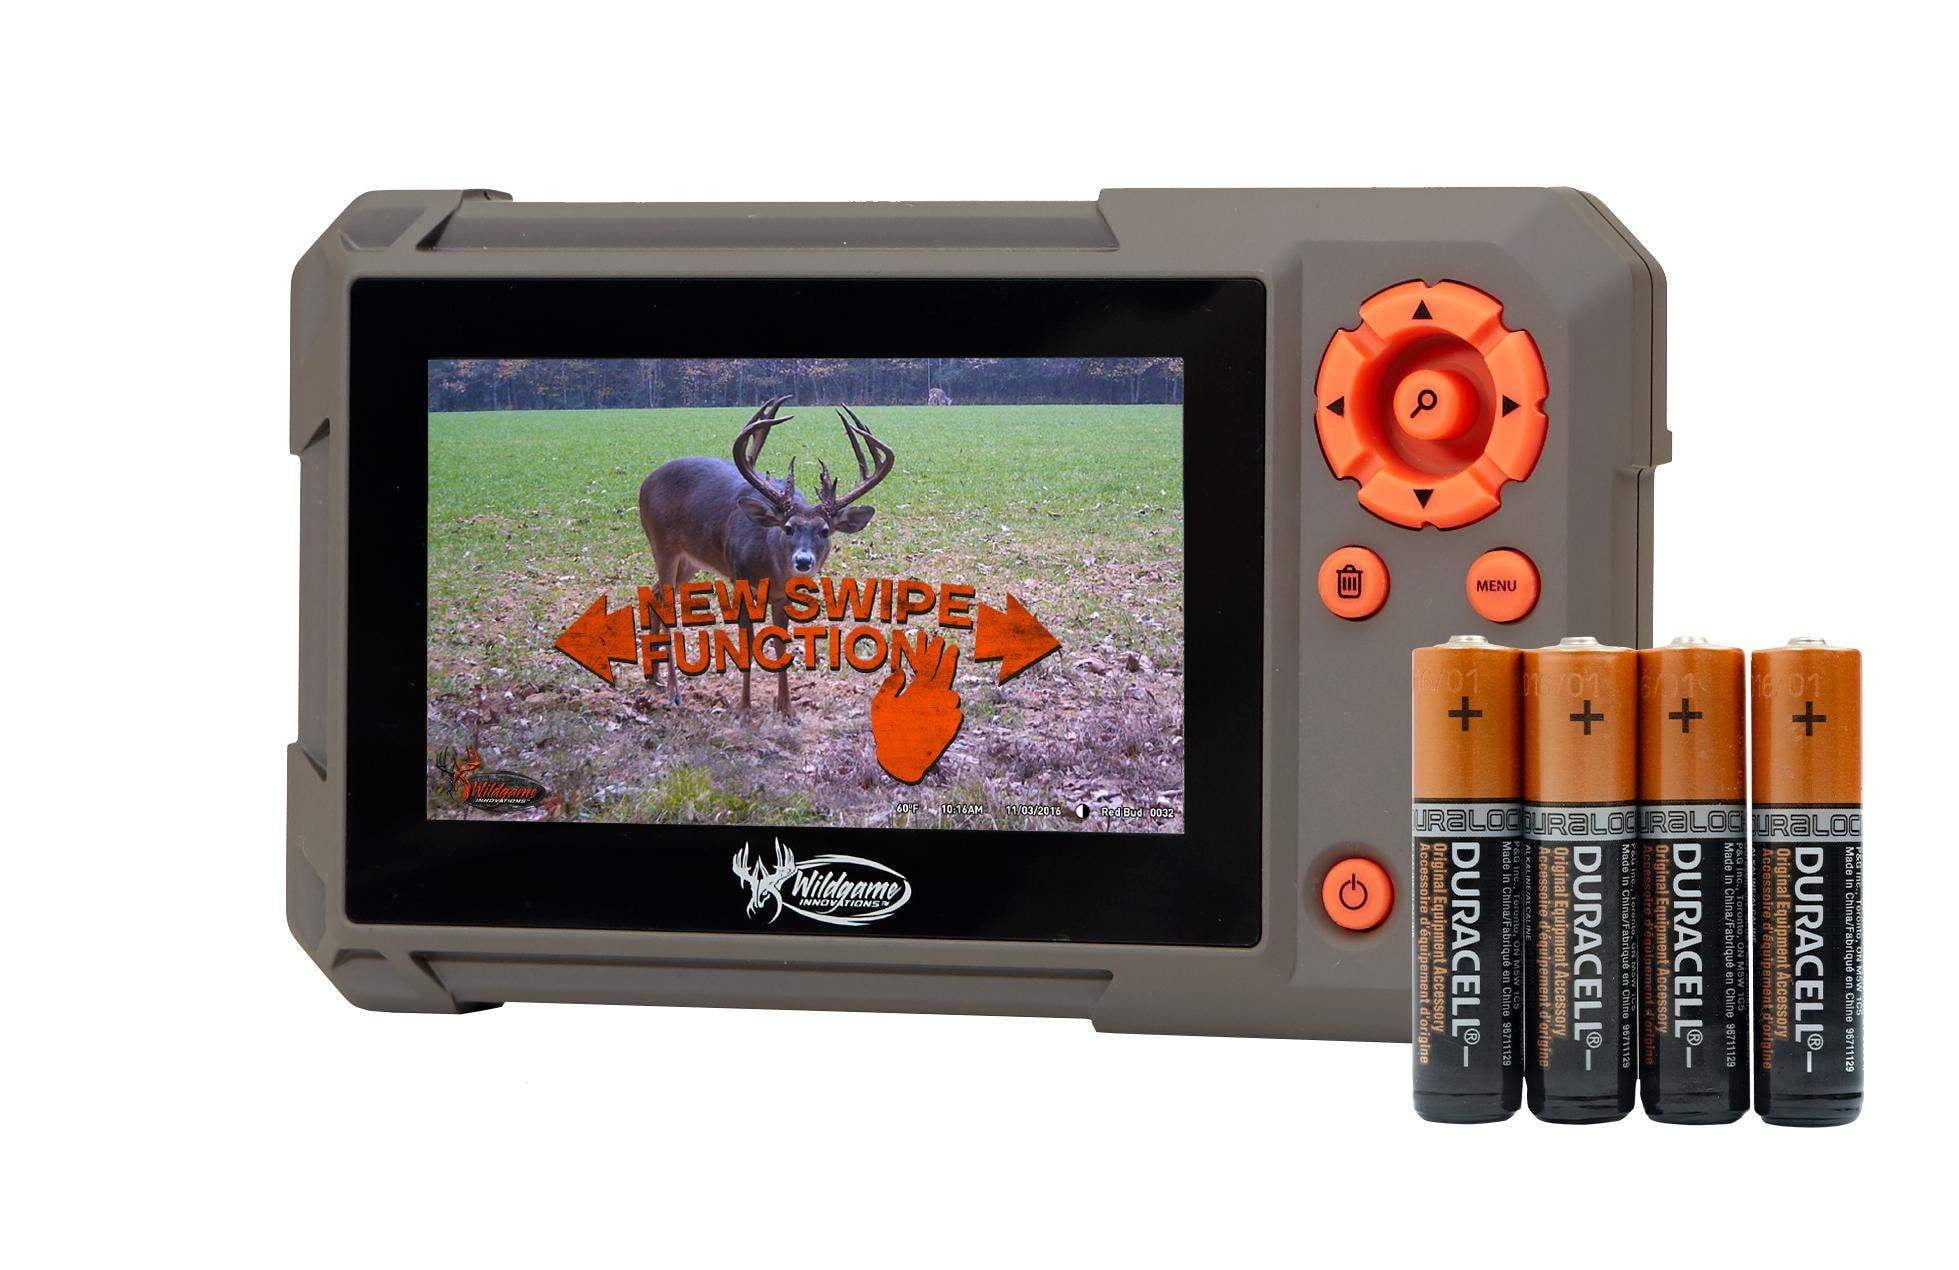 SD Card Reader 16GB 16MP Trail & Game Hunting Camera 120°Angle IP66 Waterproof 